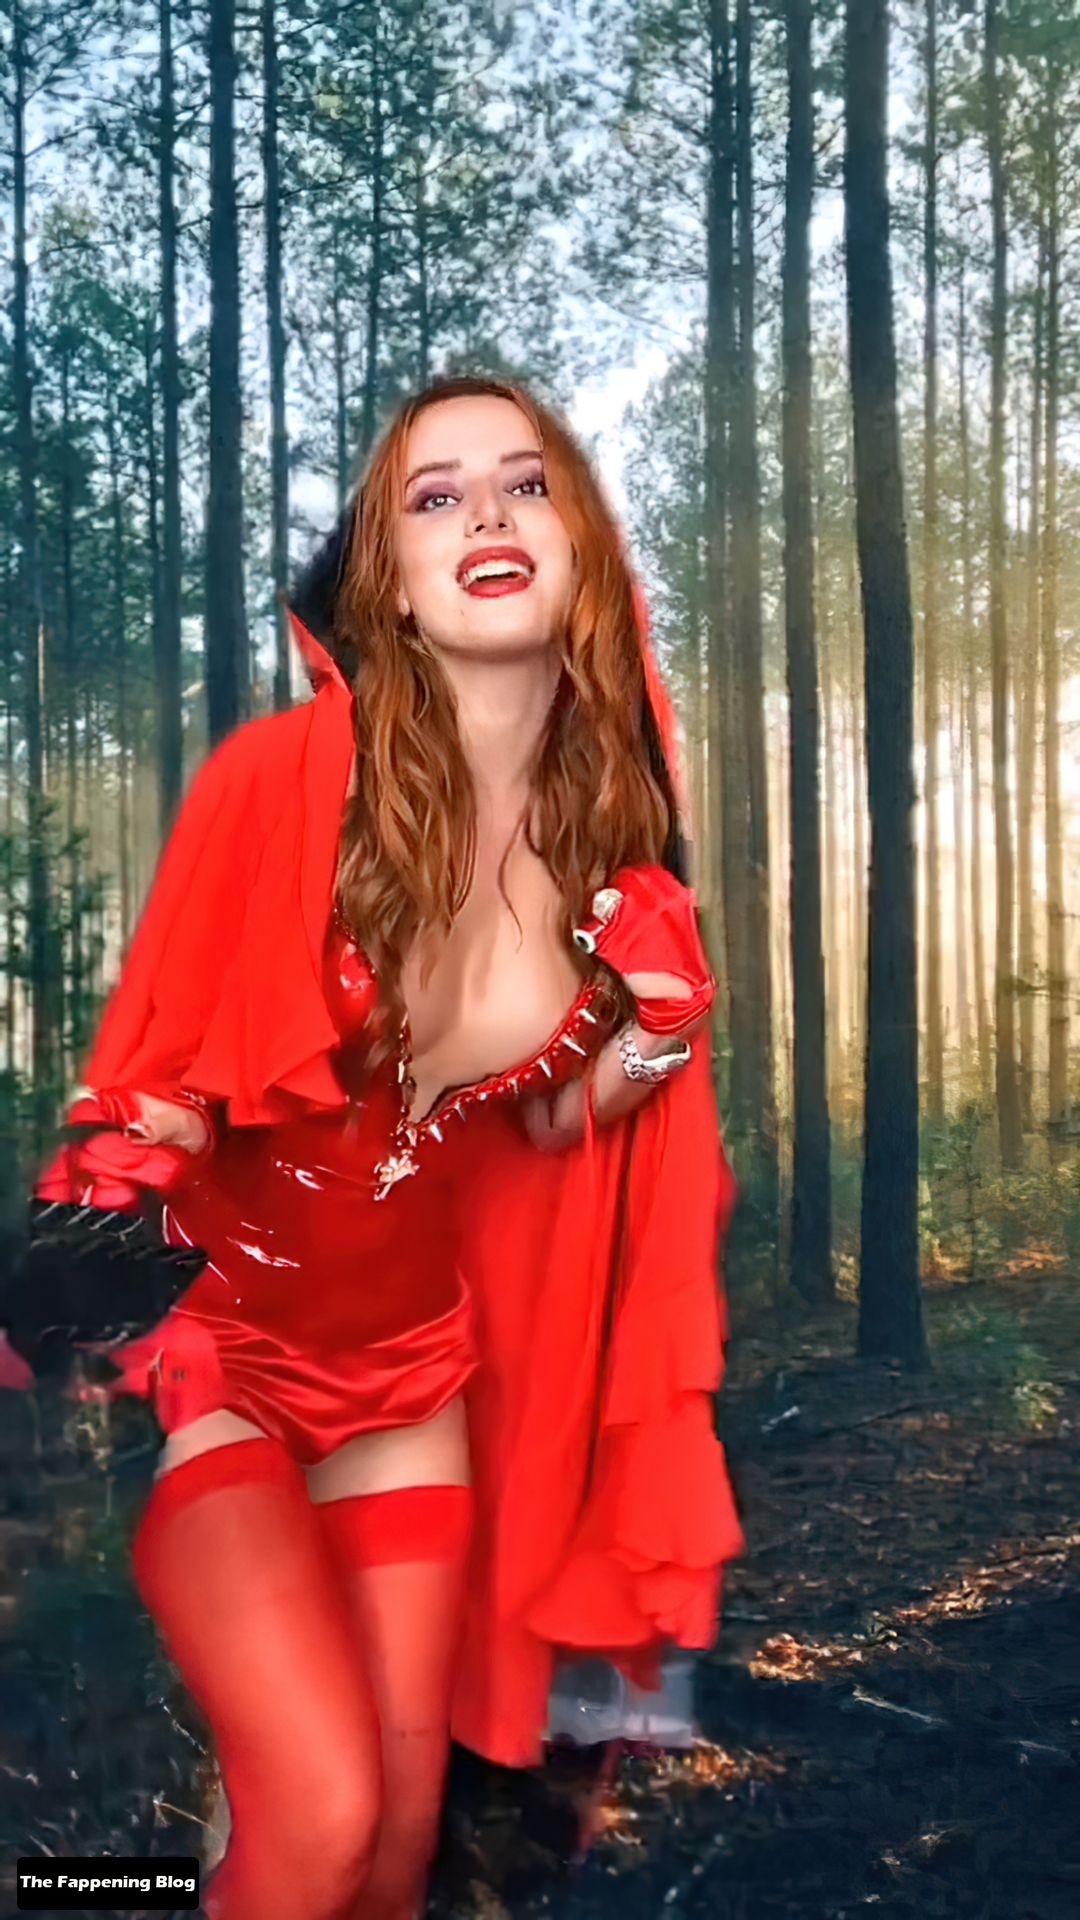 Bella Thorne Looks Hot On Halloween (18 New Photos + Video)